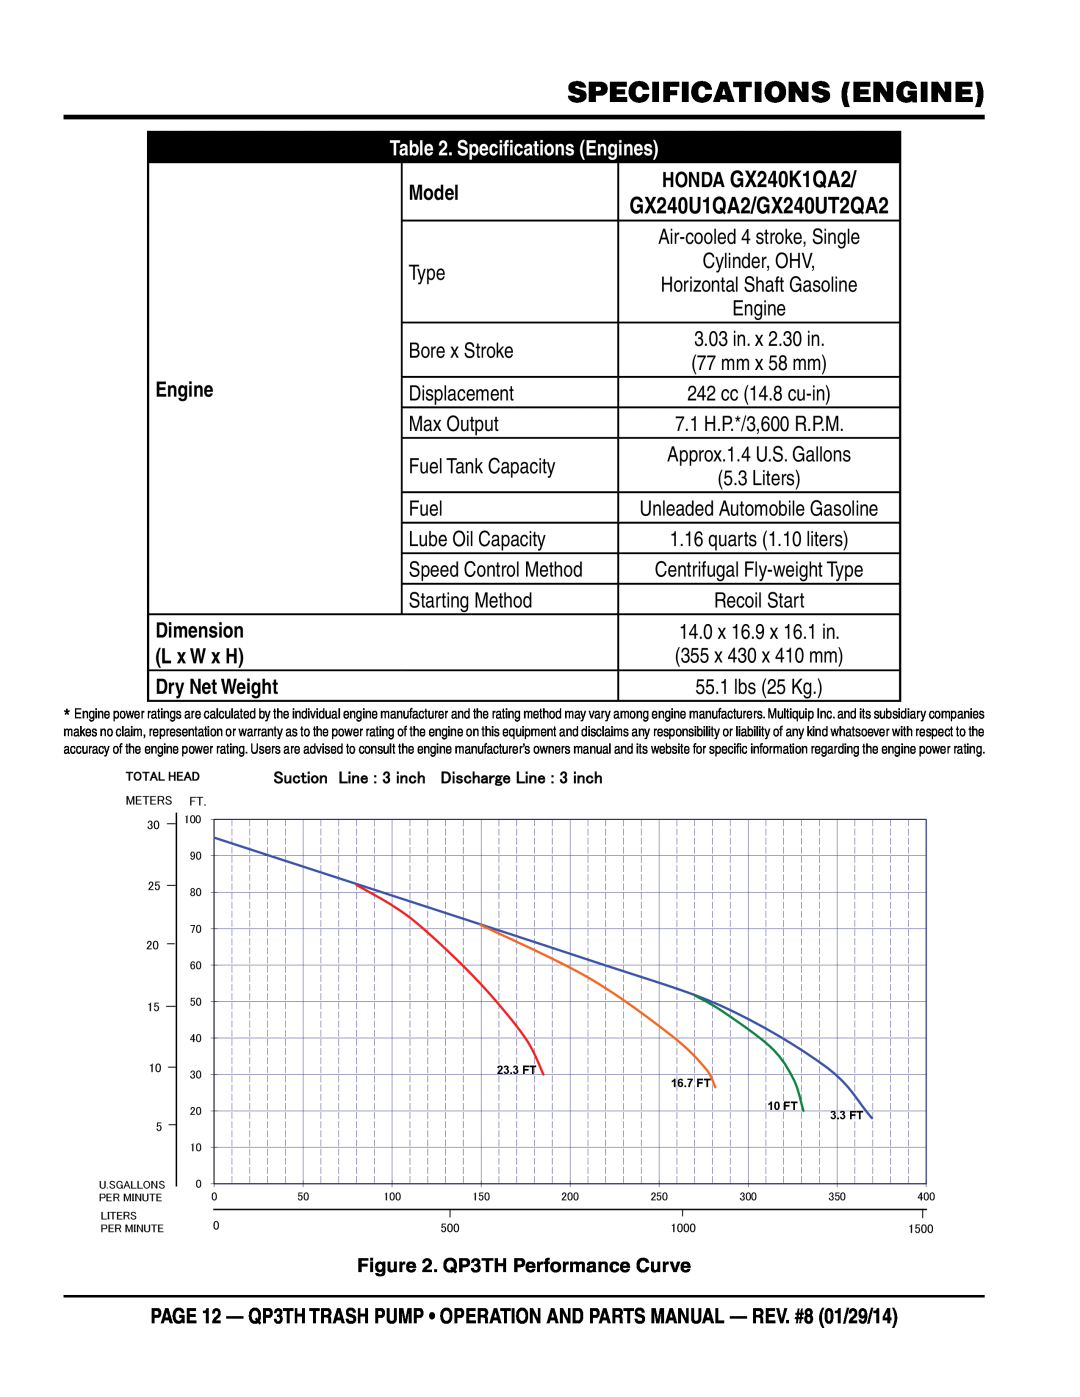 Multiquip QP3TH manual HONDA GX240K1QA2, Specifications Engines, Dimension, L x W x H, Model, Dry Net Weight 